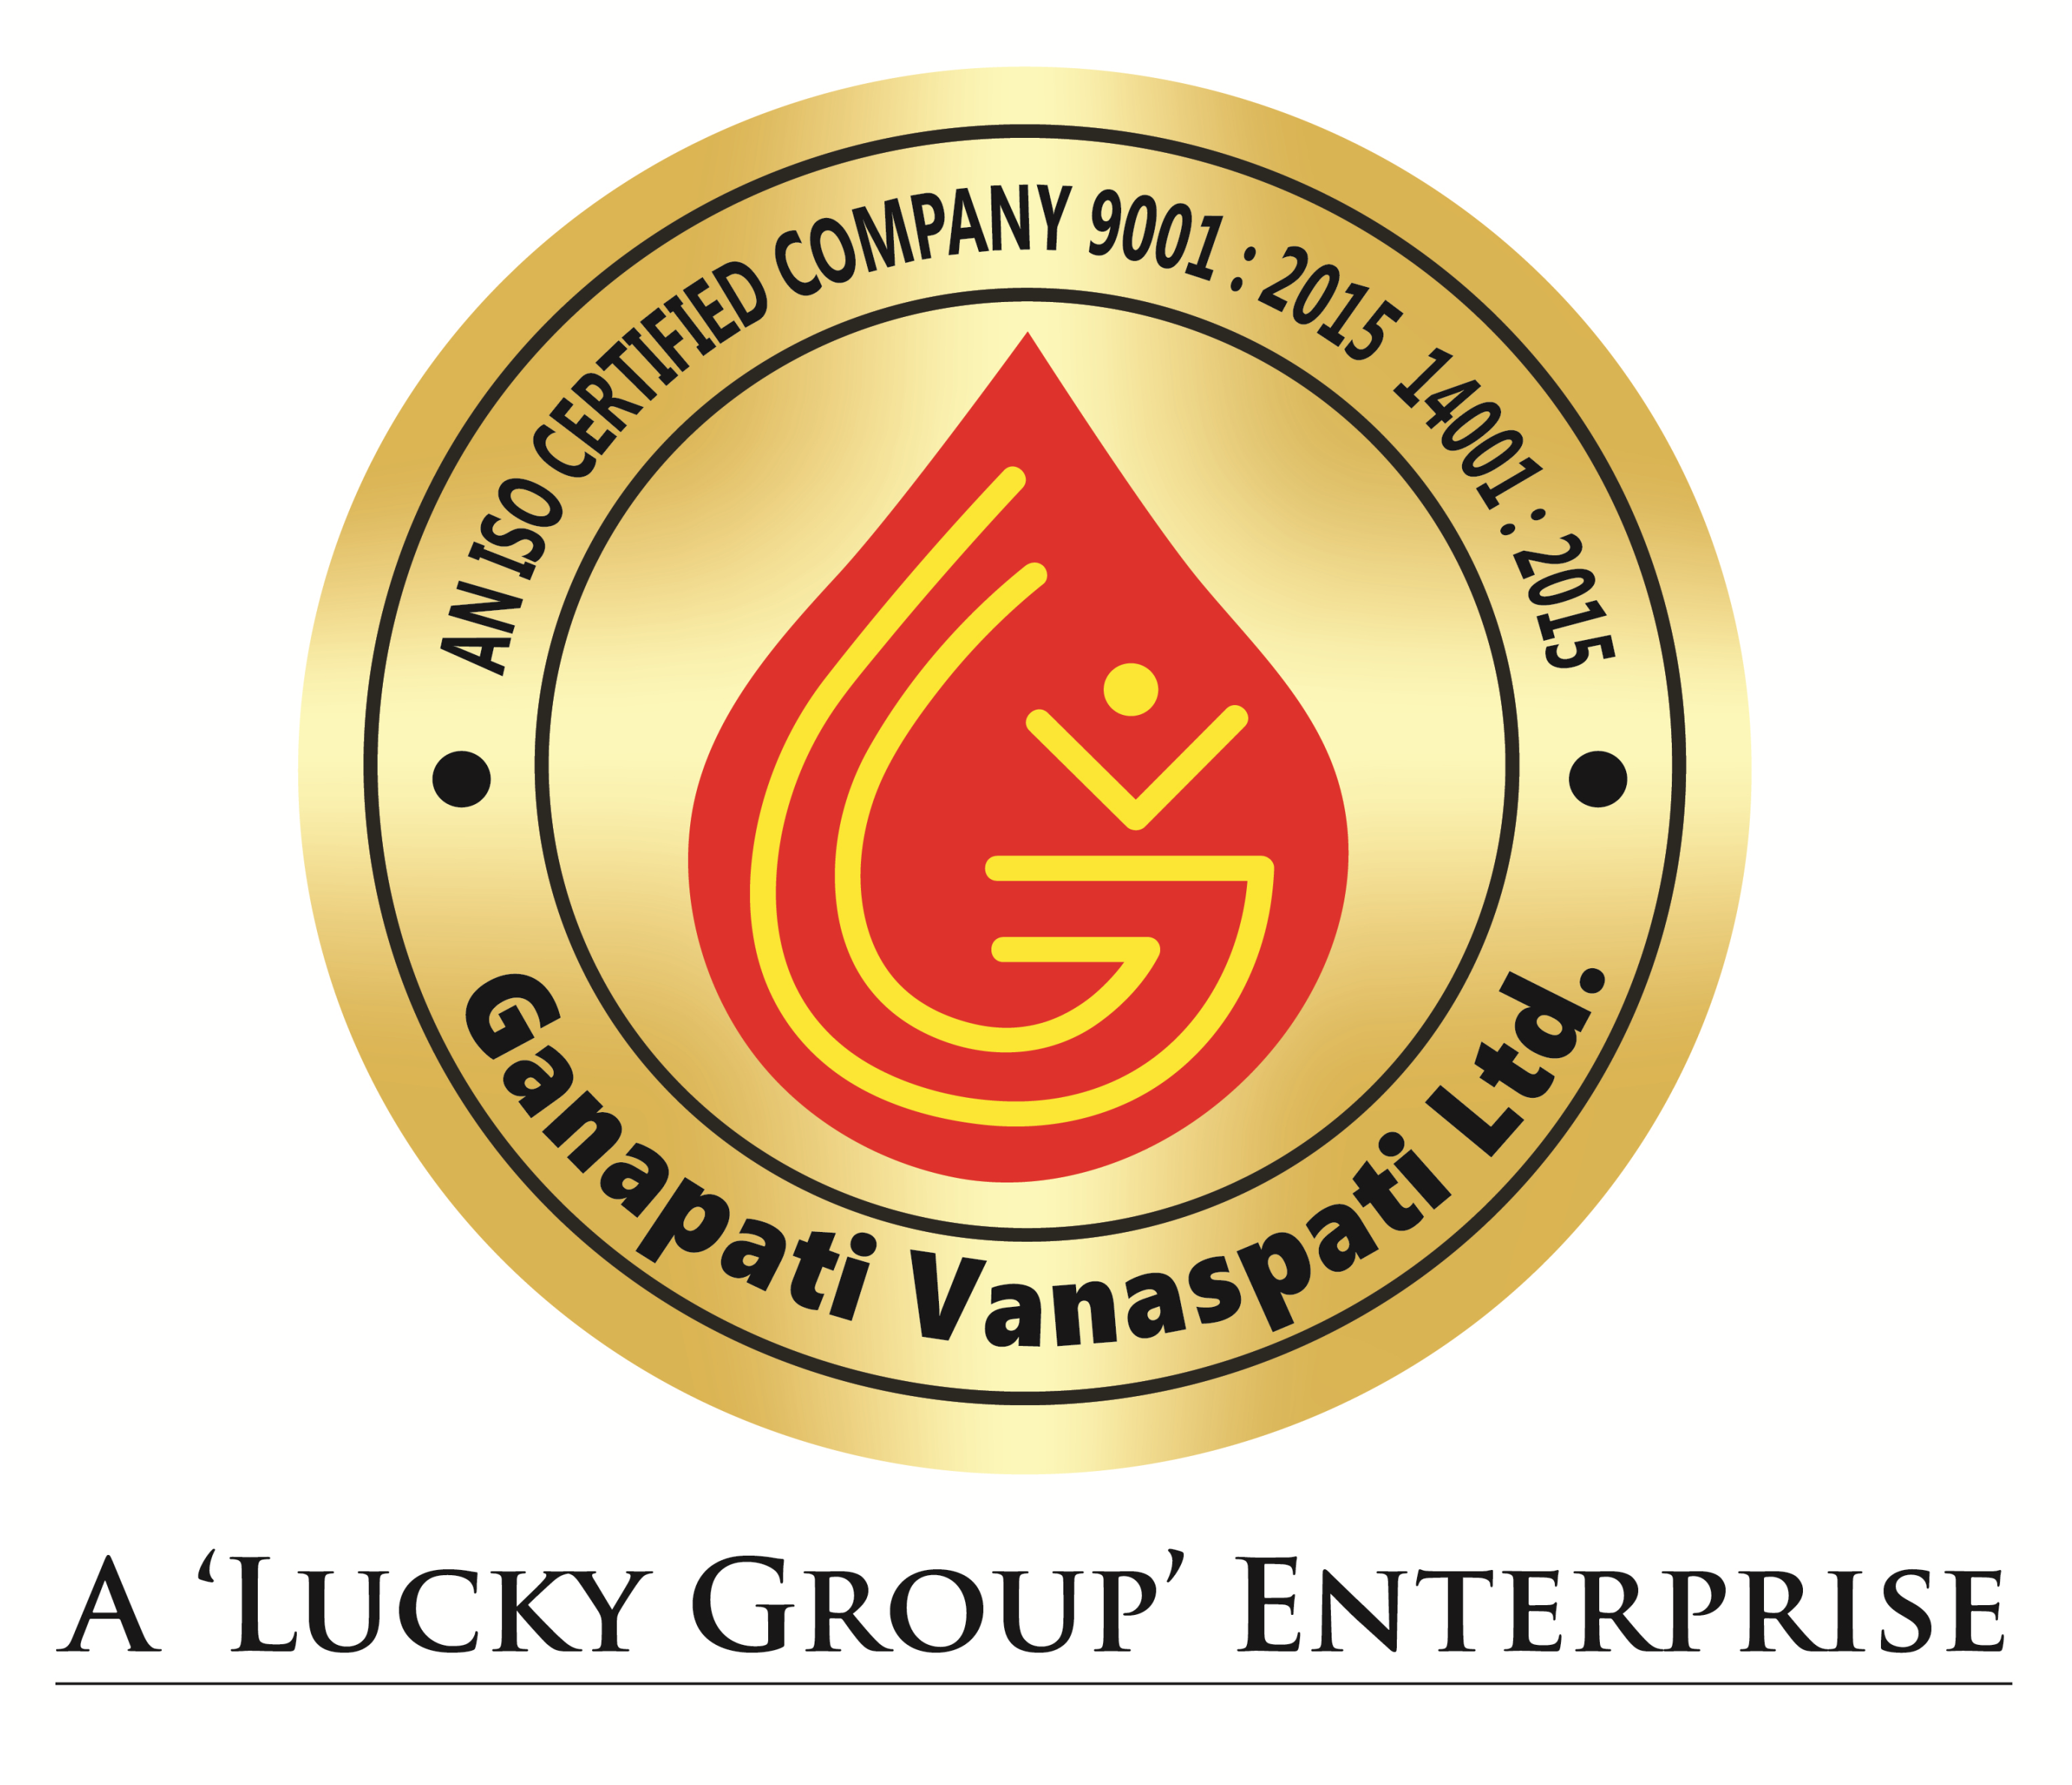 Ganapati Vanaspati Limited